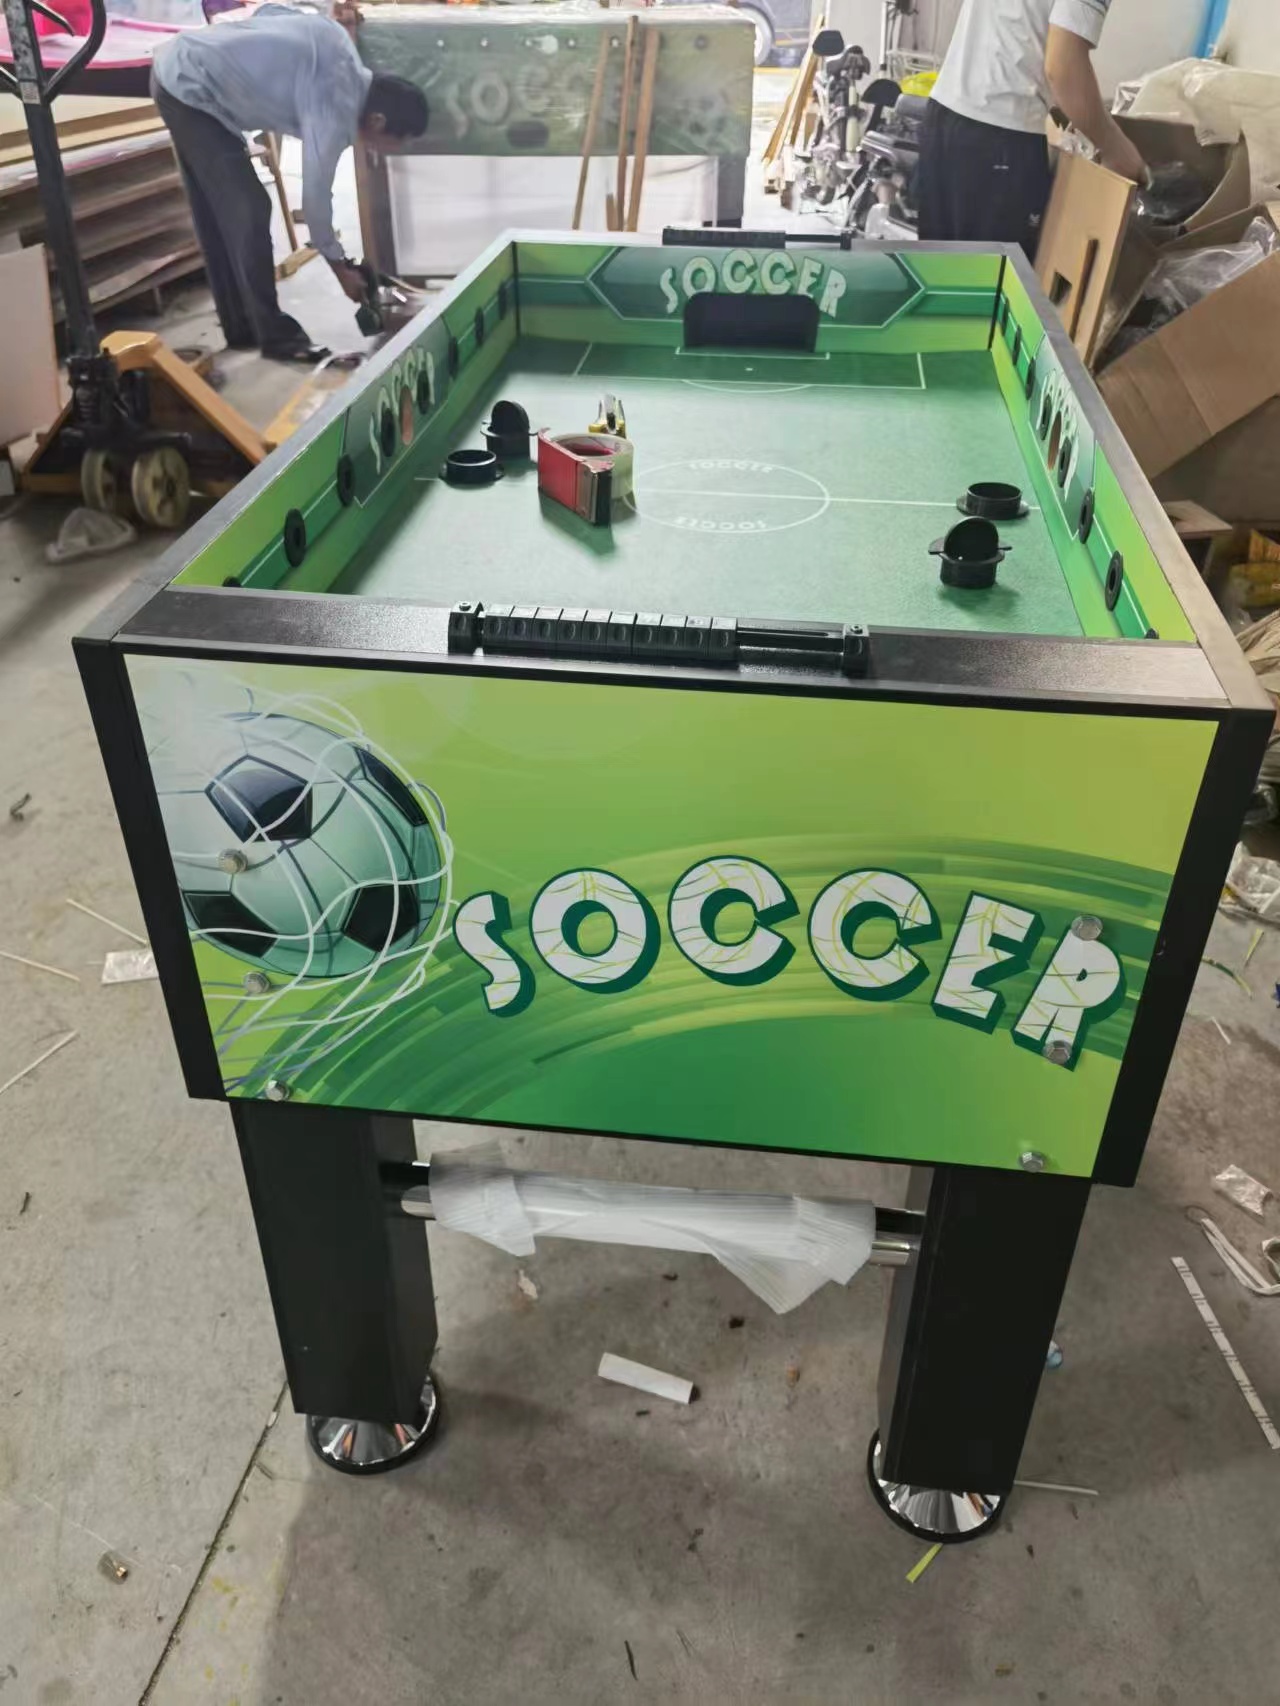 FIFA Soccer Arcade Machine | Football Arcade Games